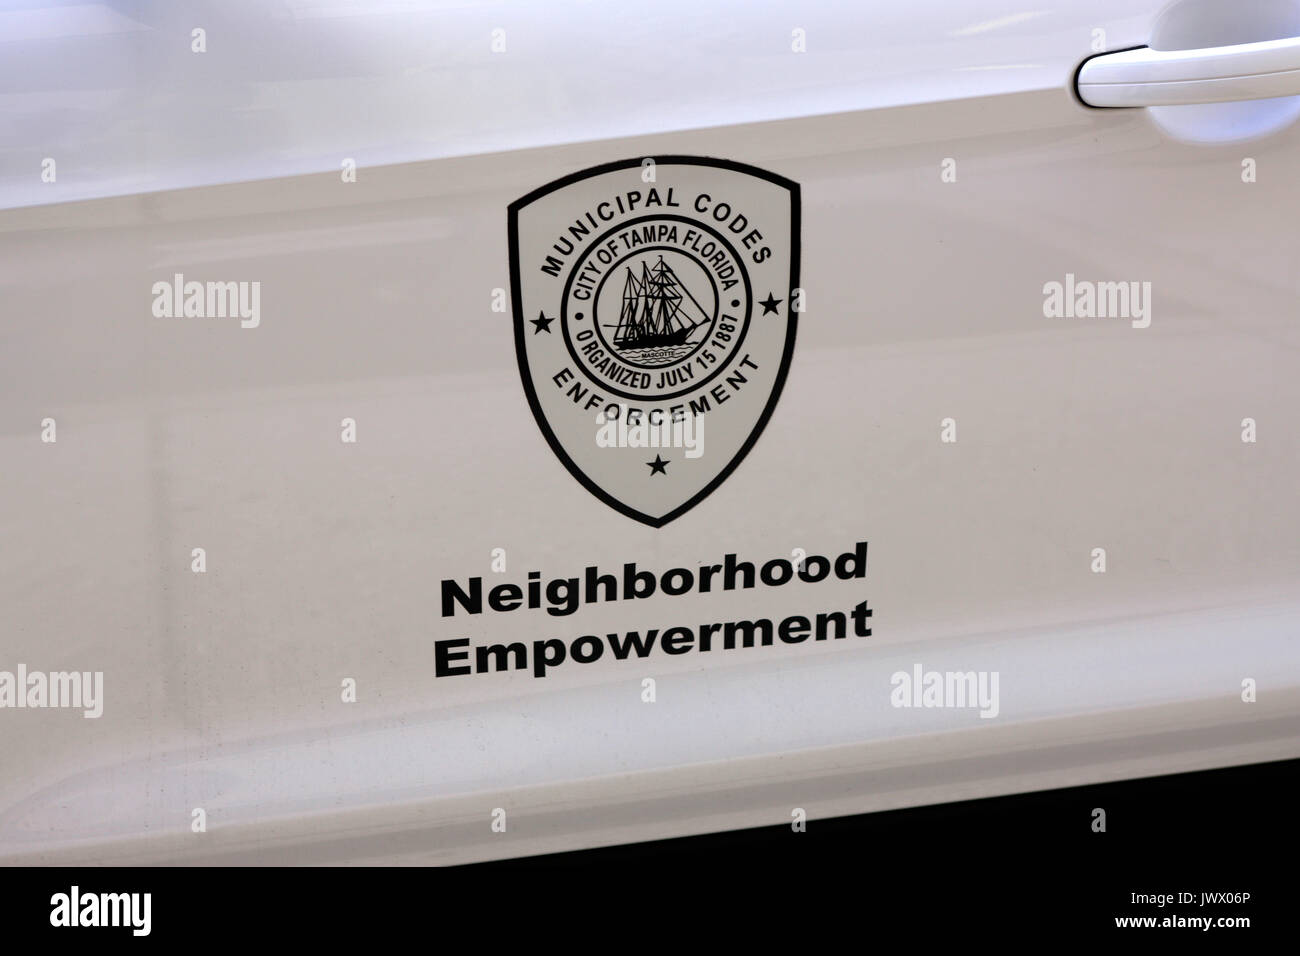 Municipal Codes Enforcement Neighborhood Empowerment vehicle door sign in Tampa FL, USA Stock Photo